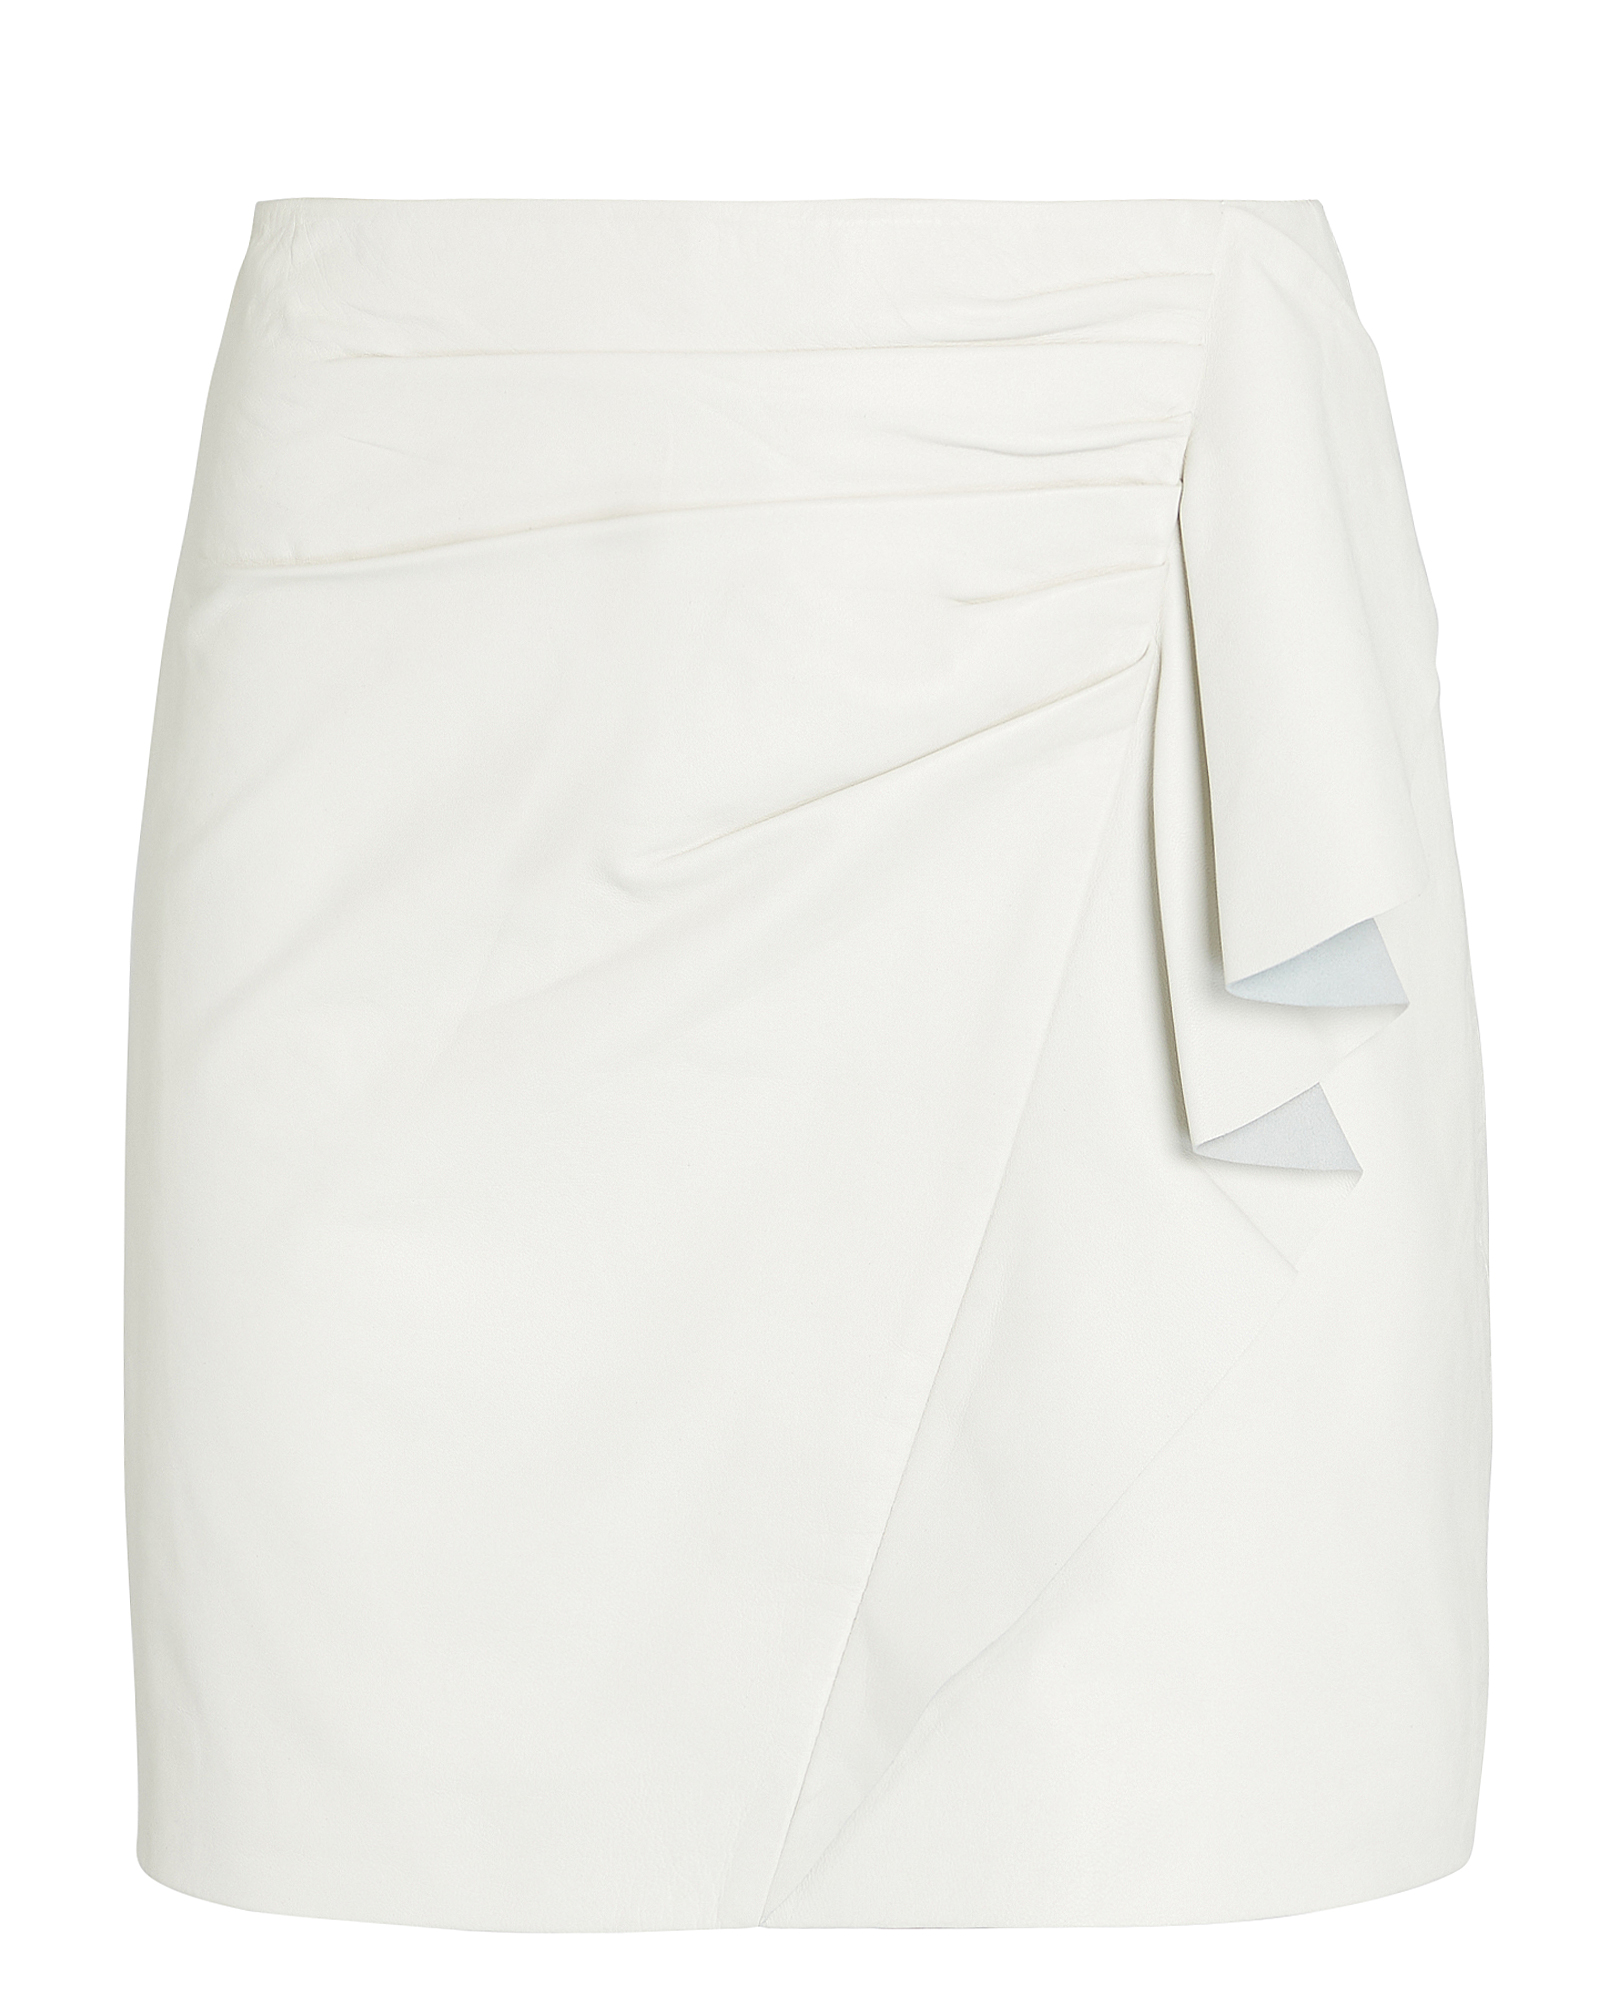 Michelle Mason Ruffled Leather Mini Skirt | INTERMIX®